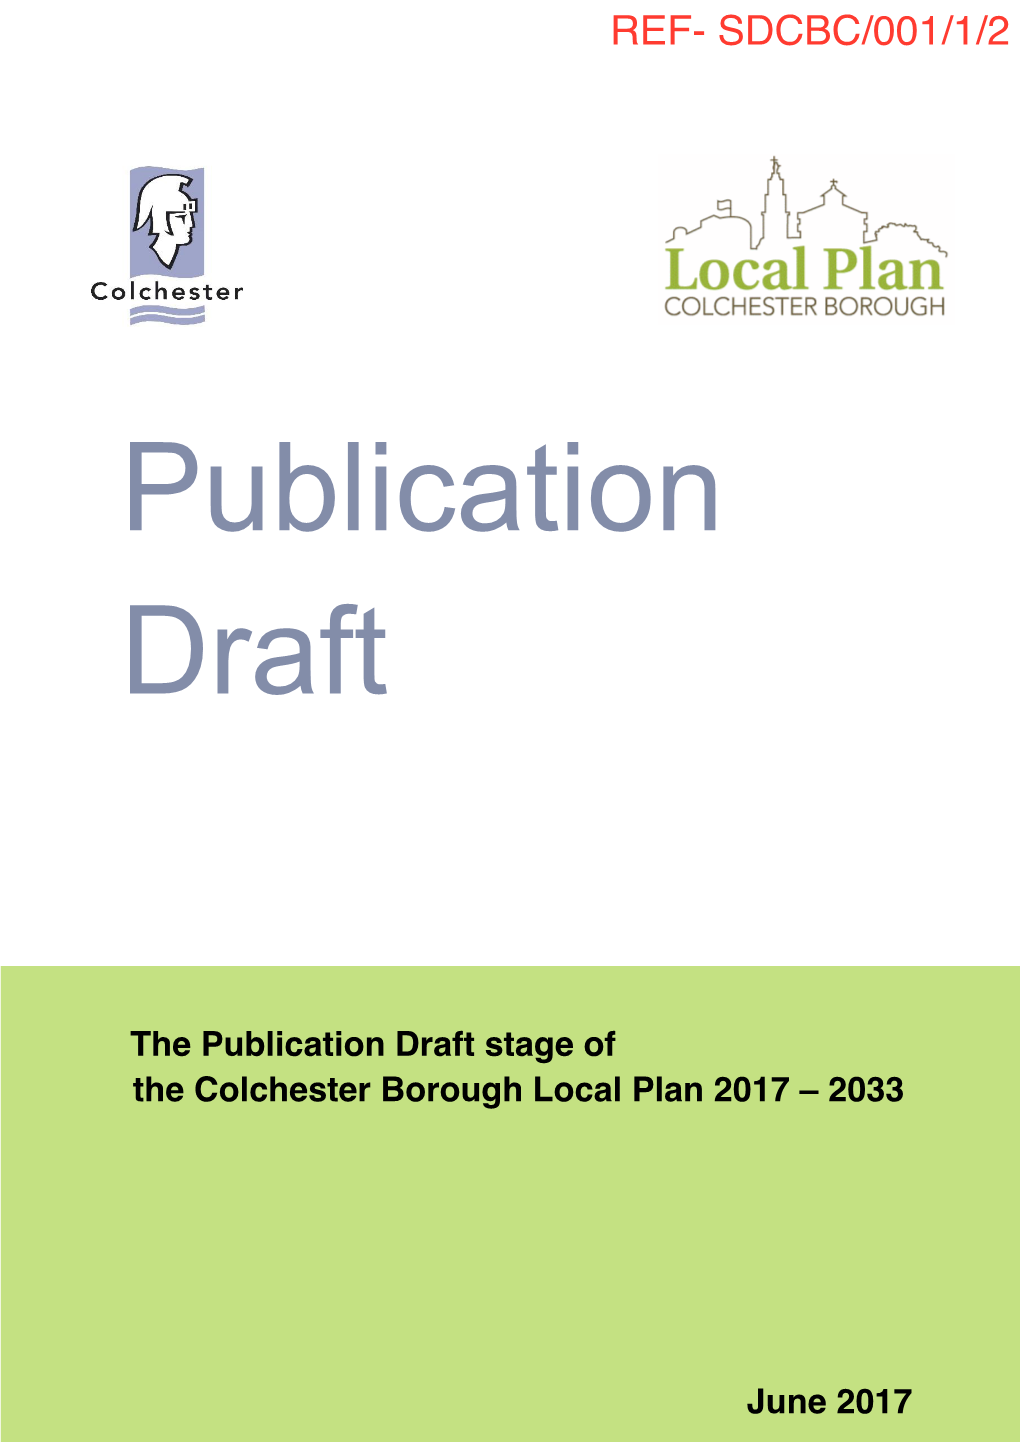 Colchester Borough Local Plan 2017 – 2033